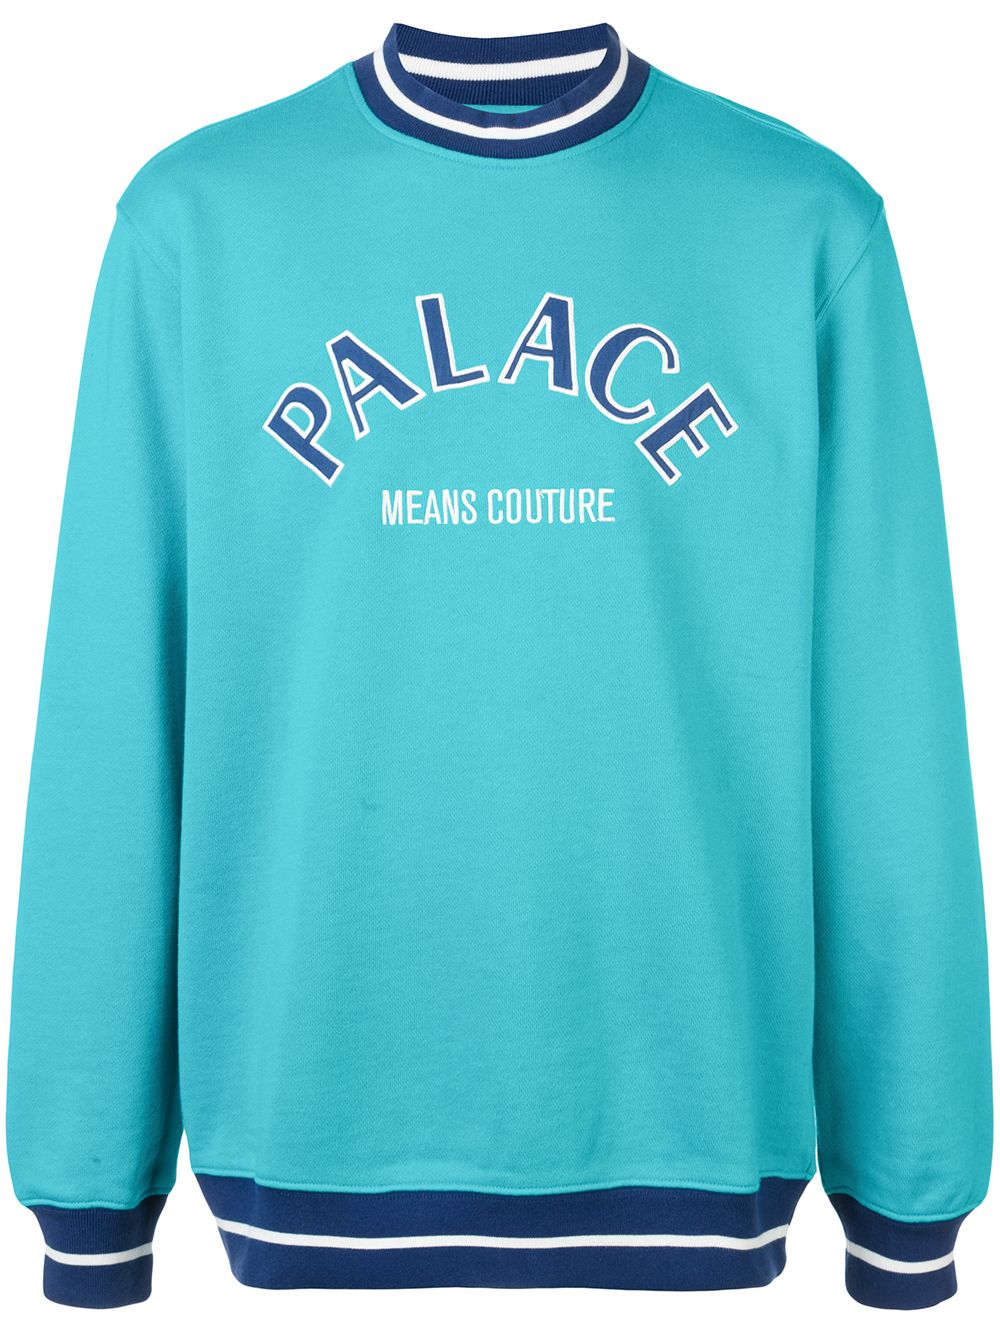 Proficiat Veilig Pilfer Palace Couture Crew Sweatshirt - Farfetch